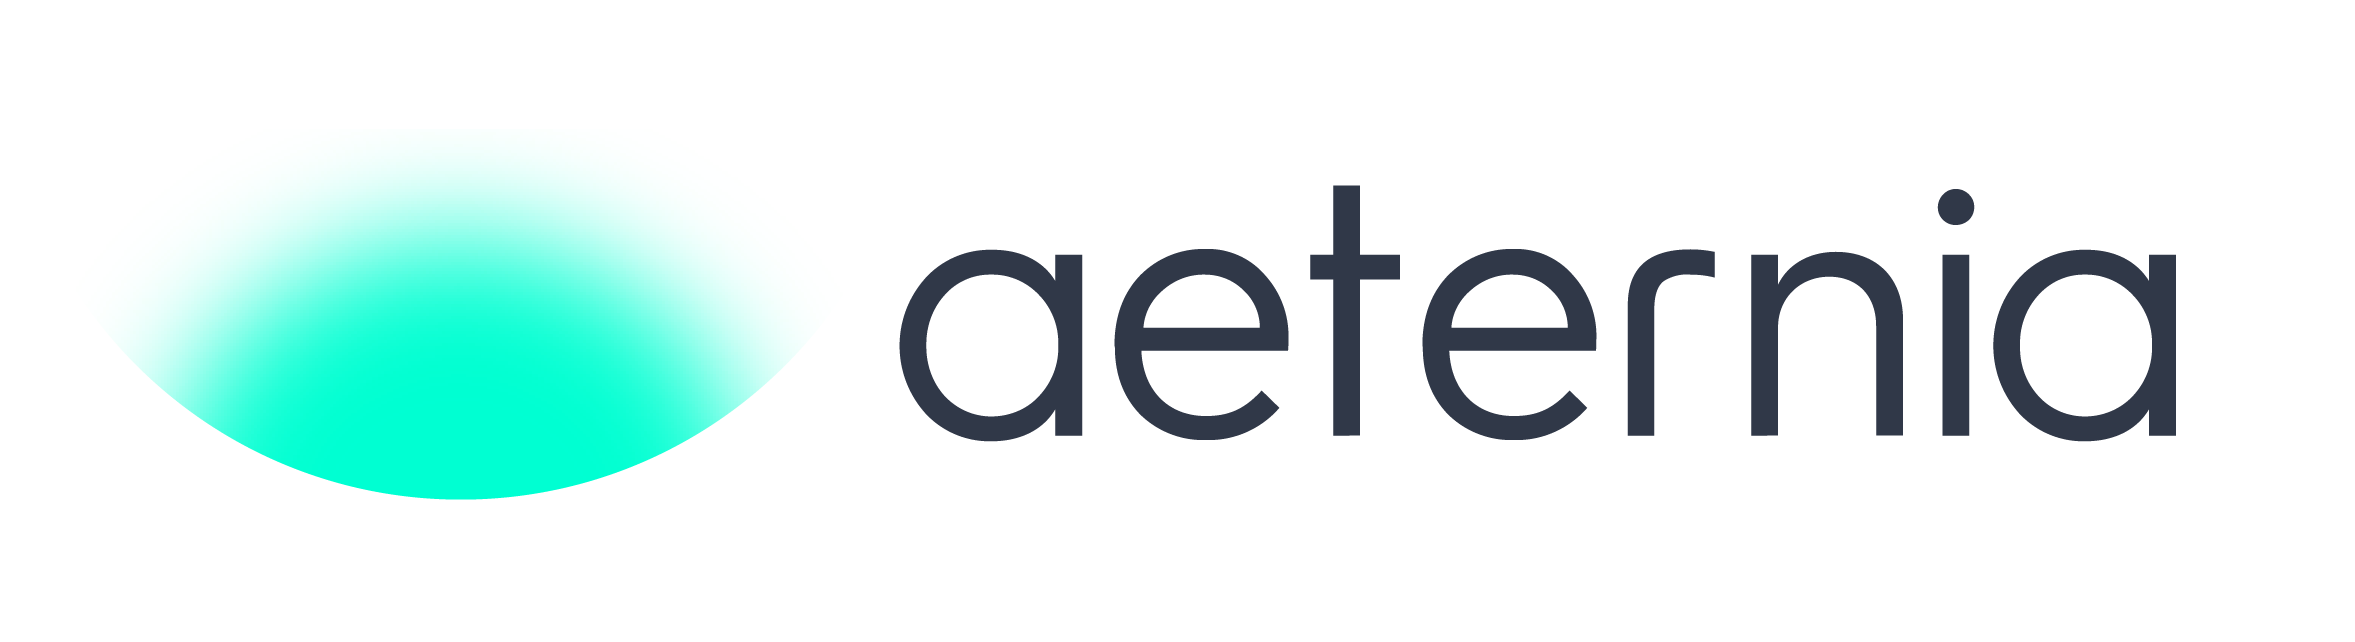 Logo Aeternia noir